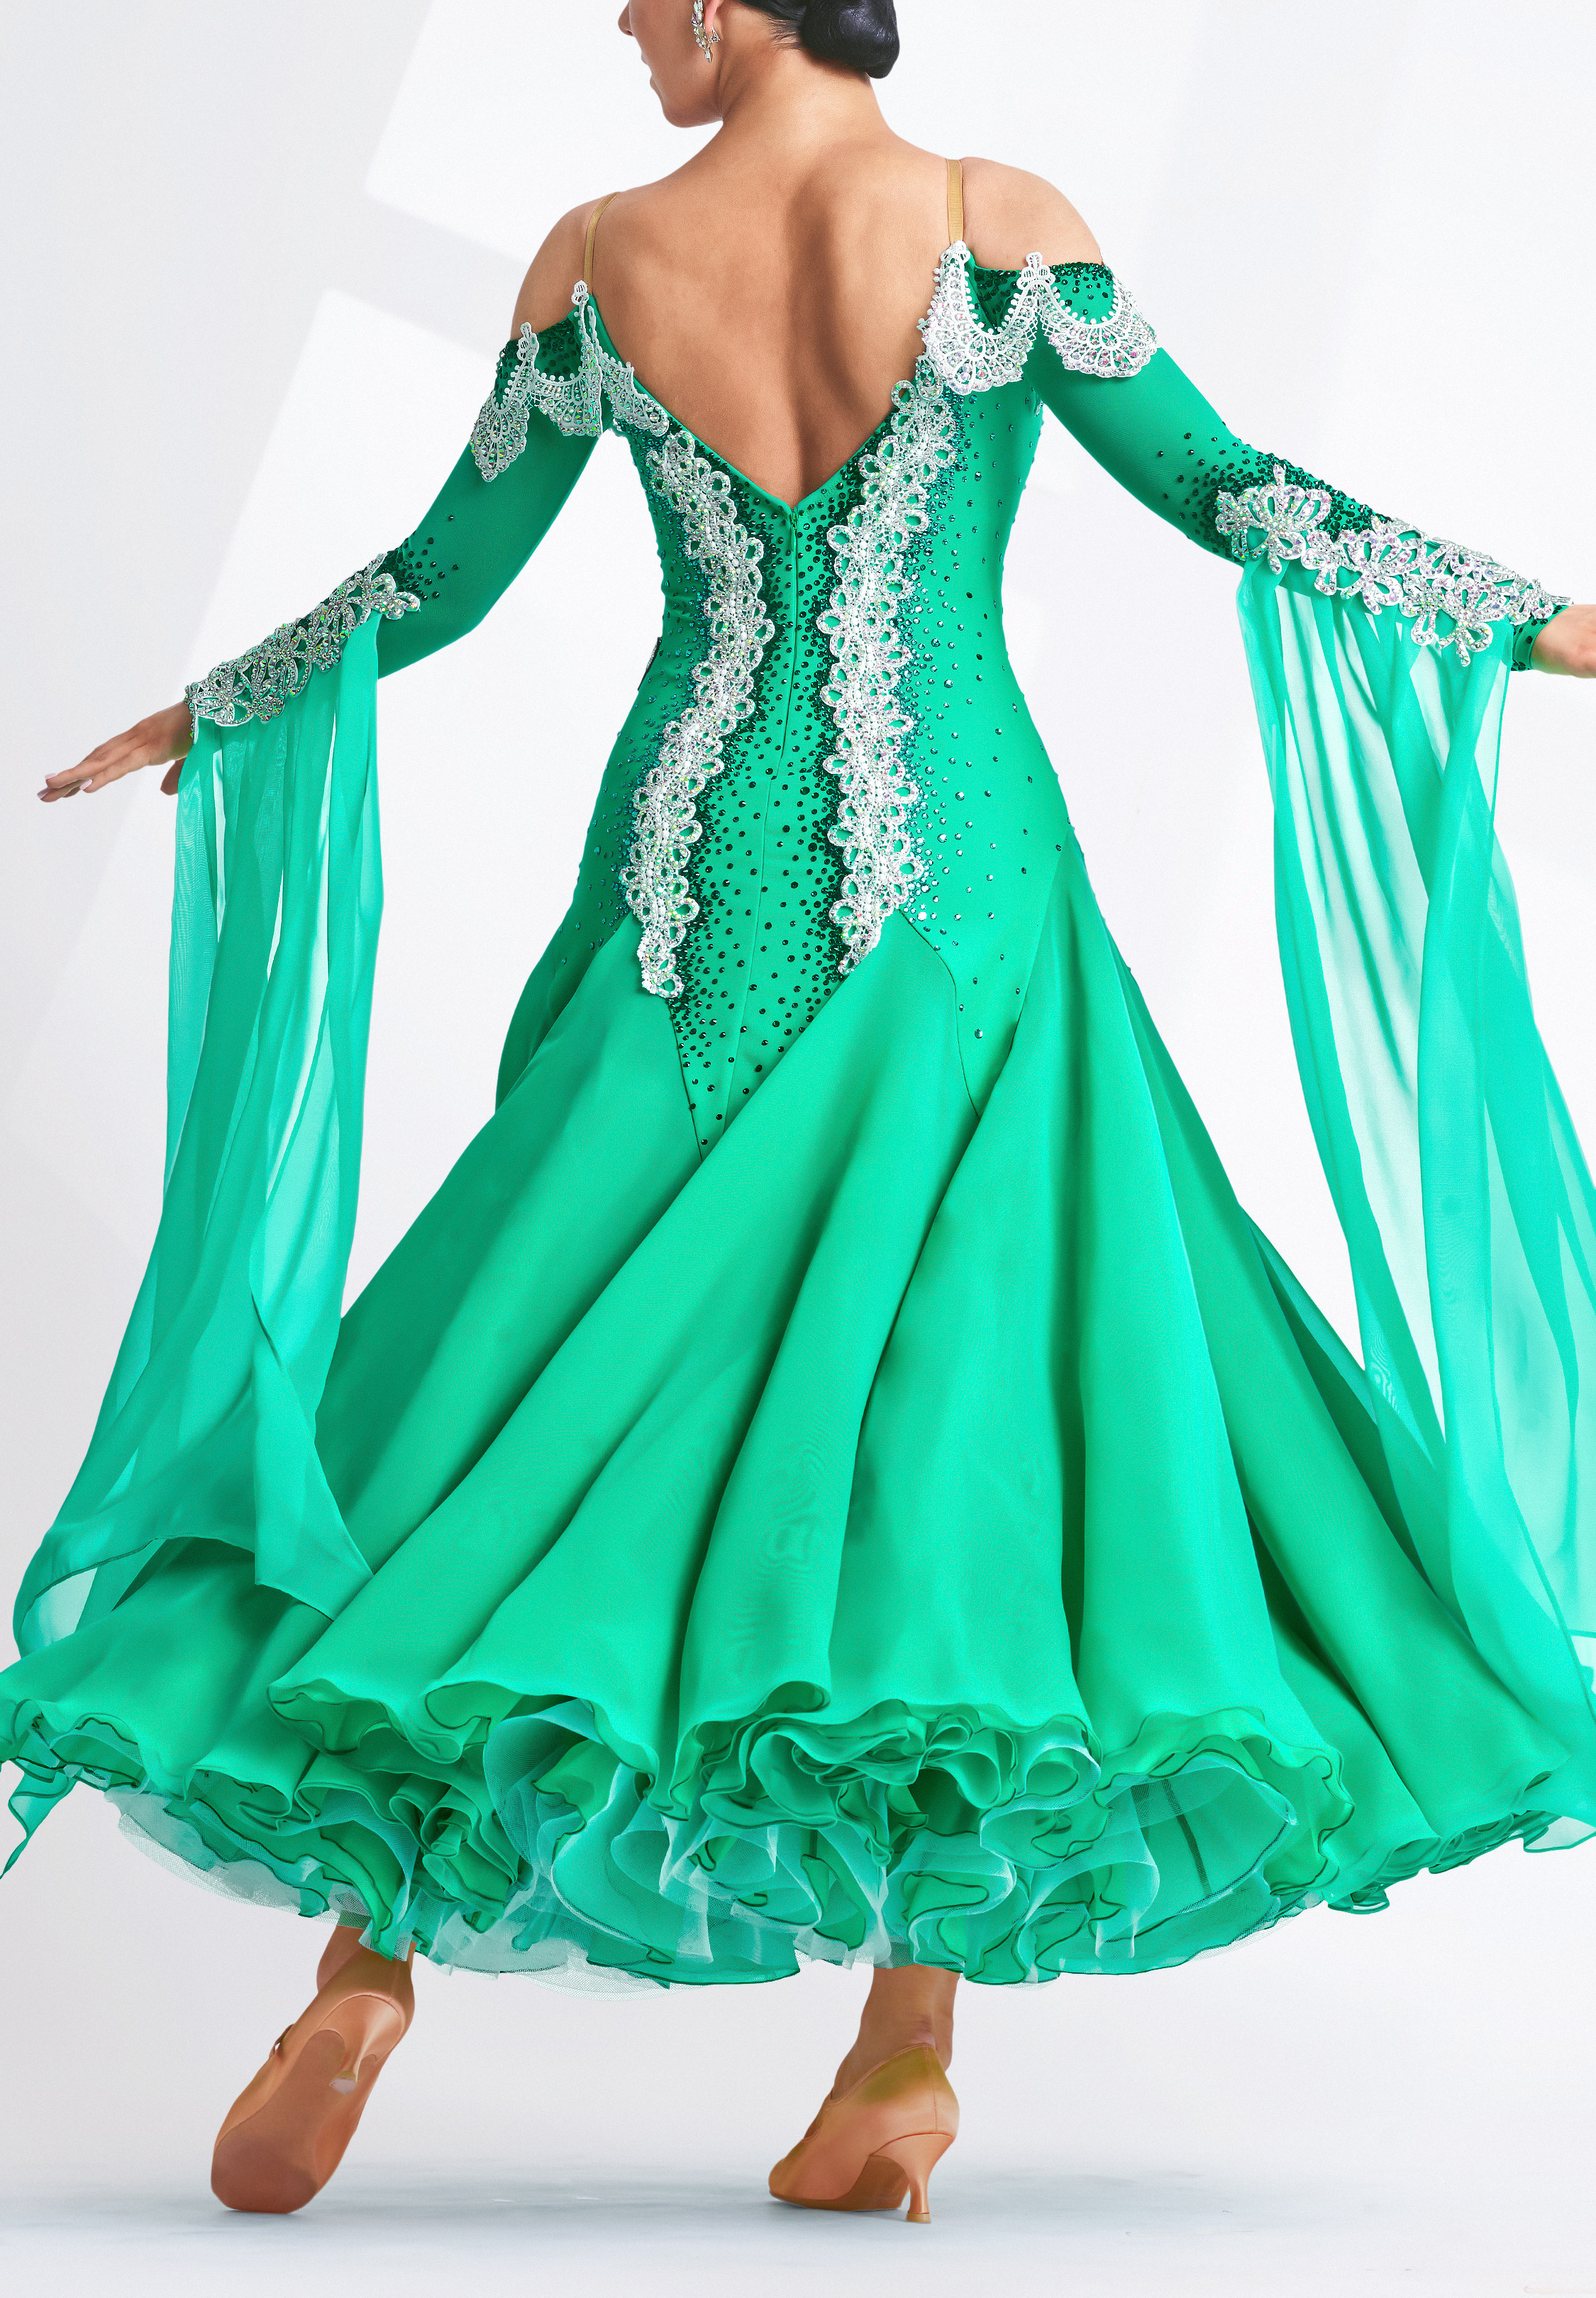 Prima Donna Pageant Dress On Sale | PromHeadquarters.com